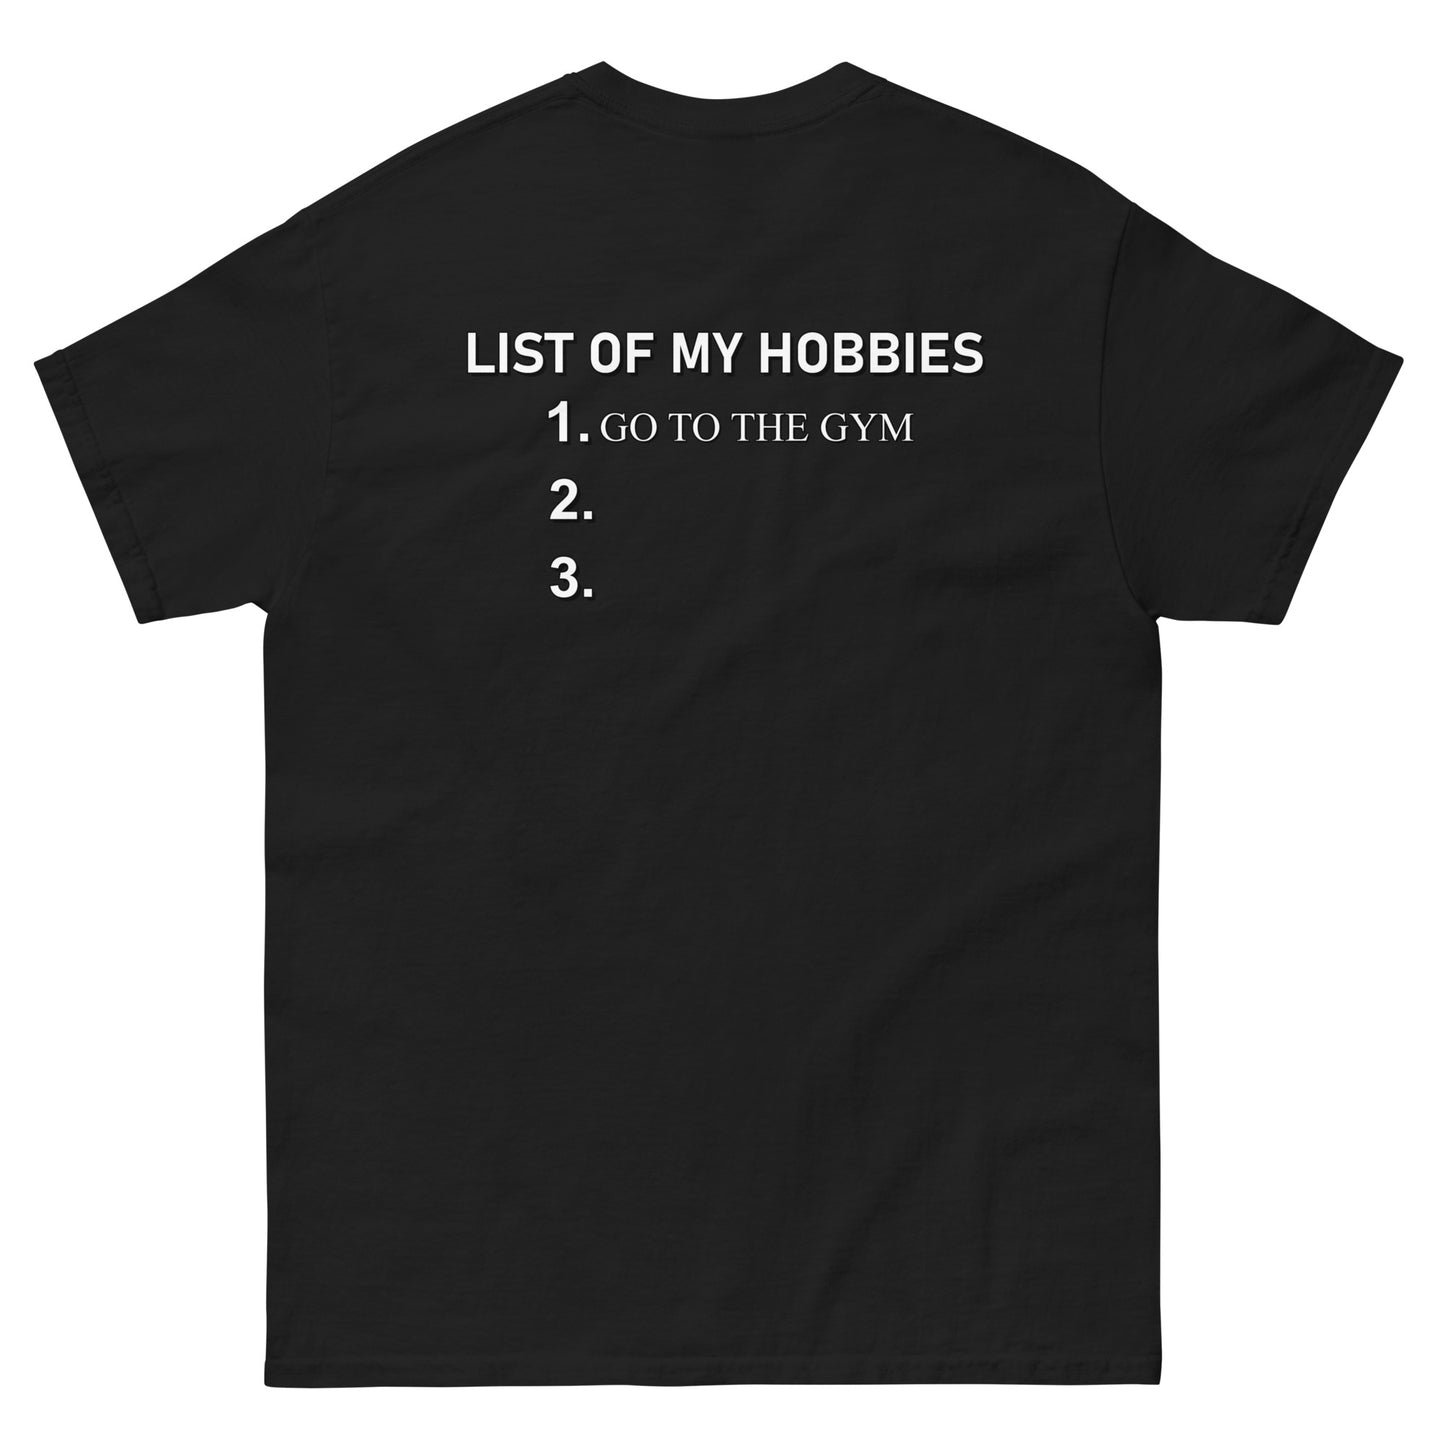 "List of my hobbies" - Classic T-Shirt